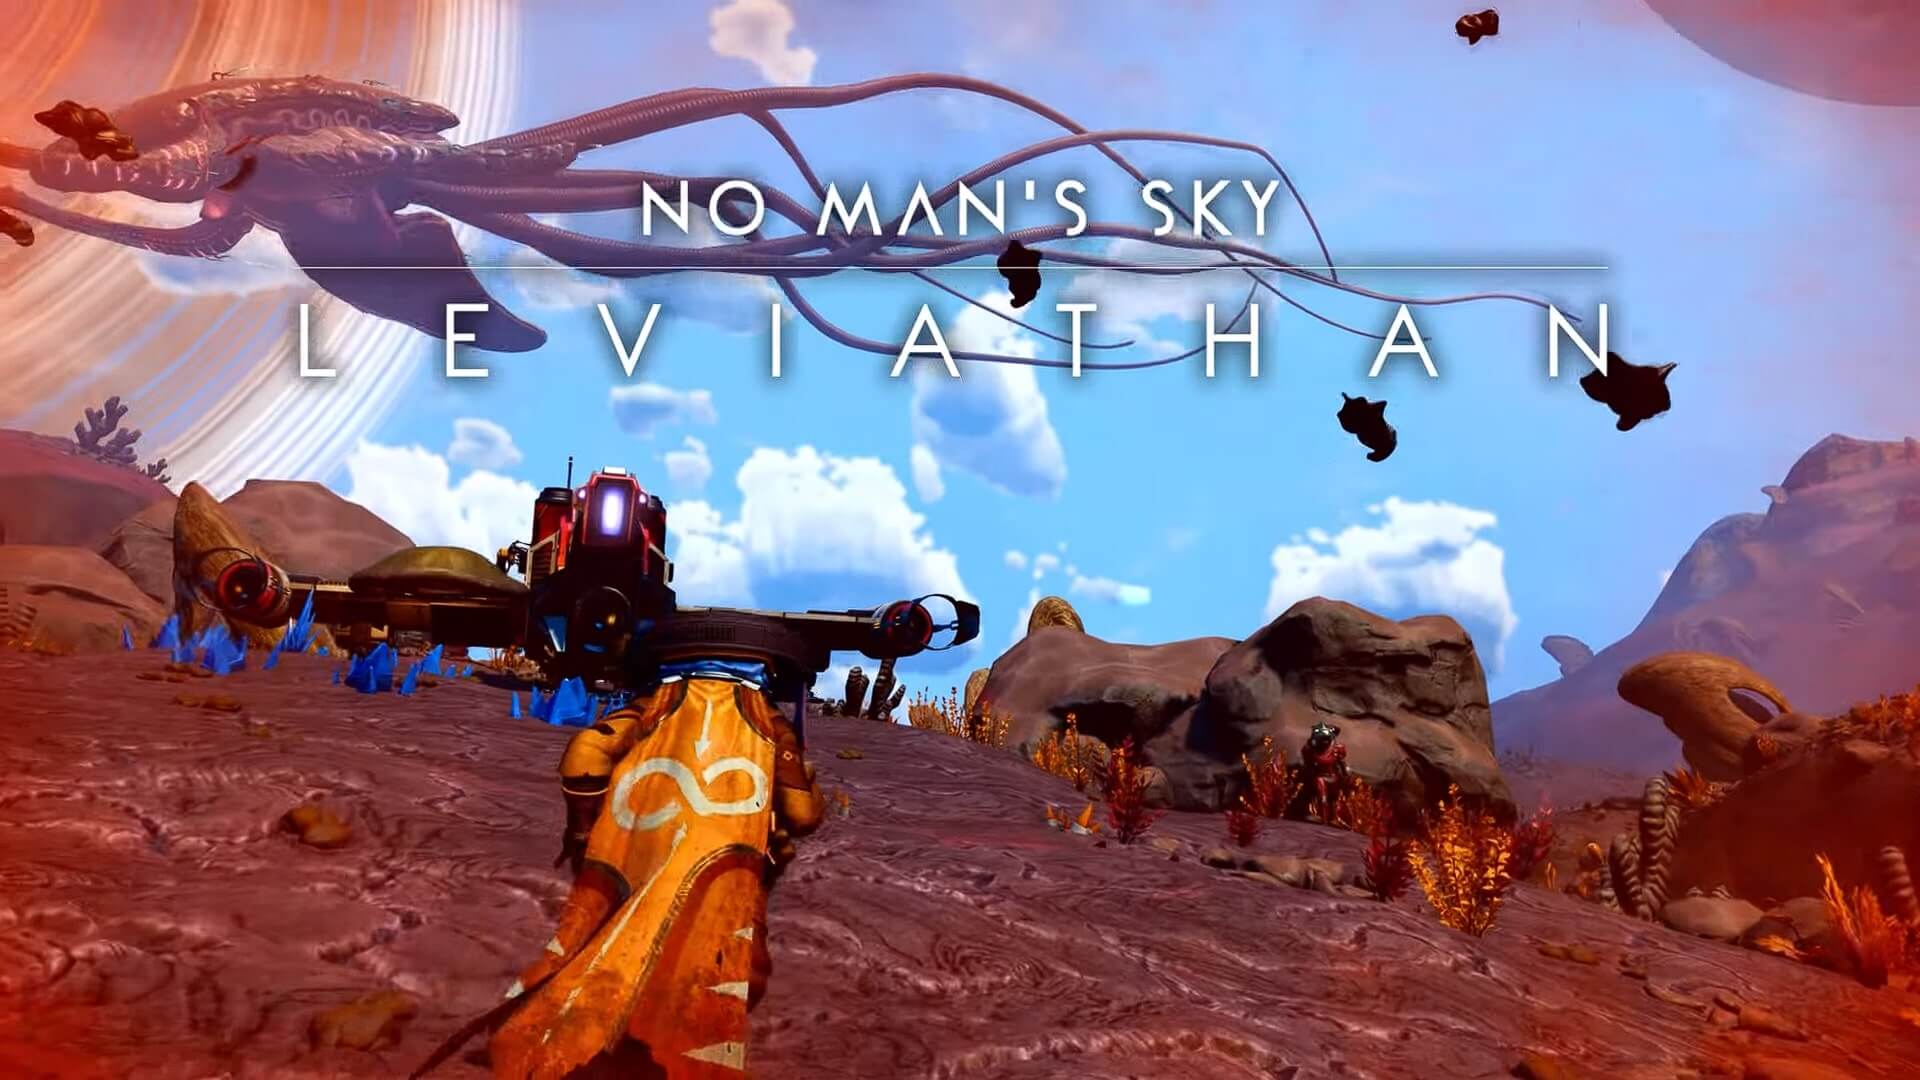 Play3 Video: No Man’s Sky: Leviathan Expedition führt Roguelike-Erfahrung ein – Trailer